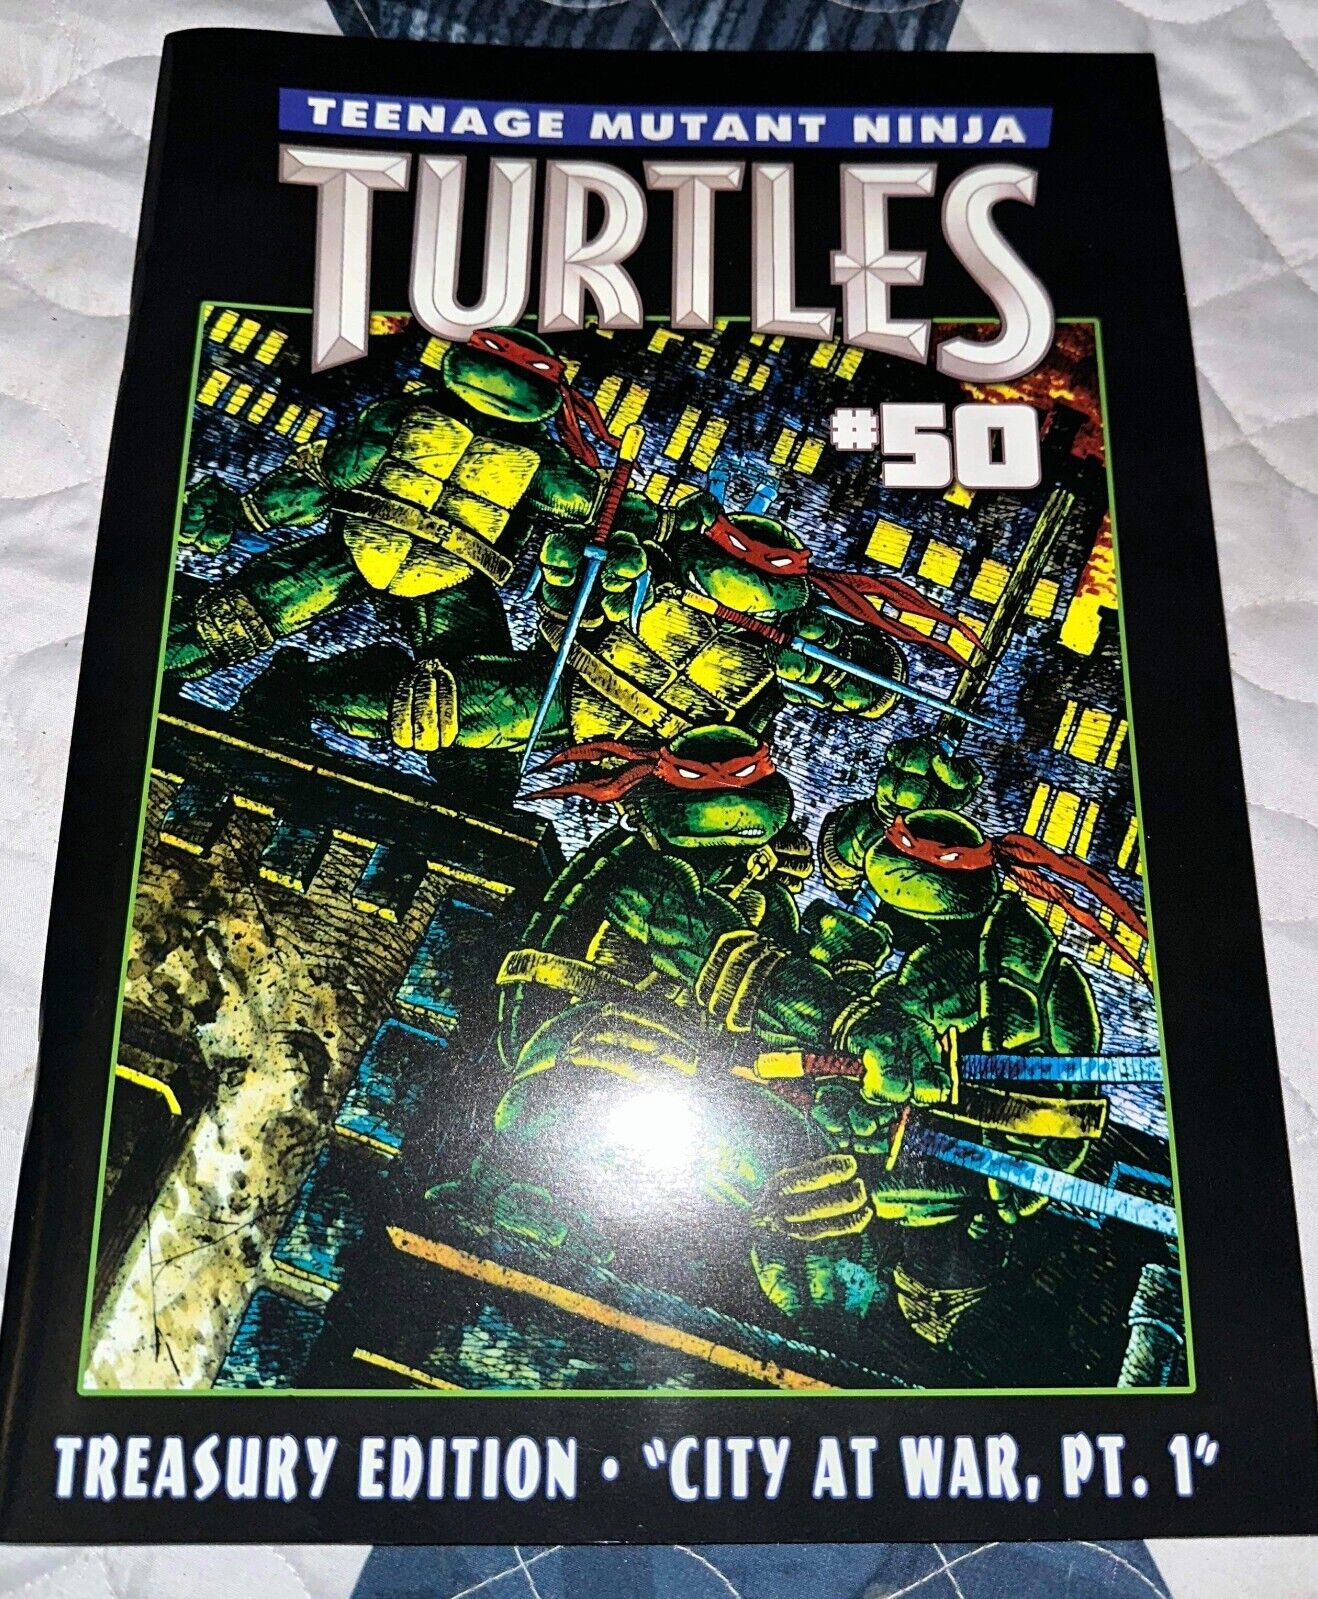 Teenage Mutant Ninja Turtles #50 City at War 1 Treasury Edition IDW Comics 2013